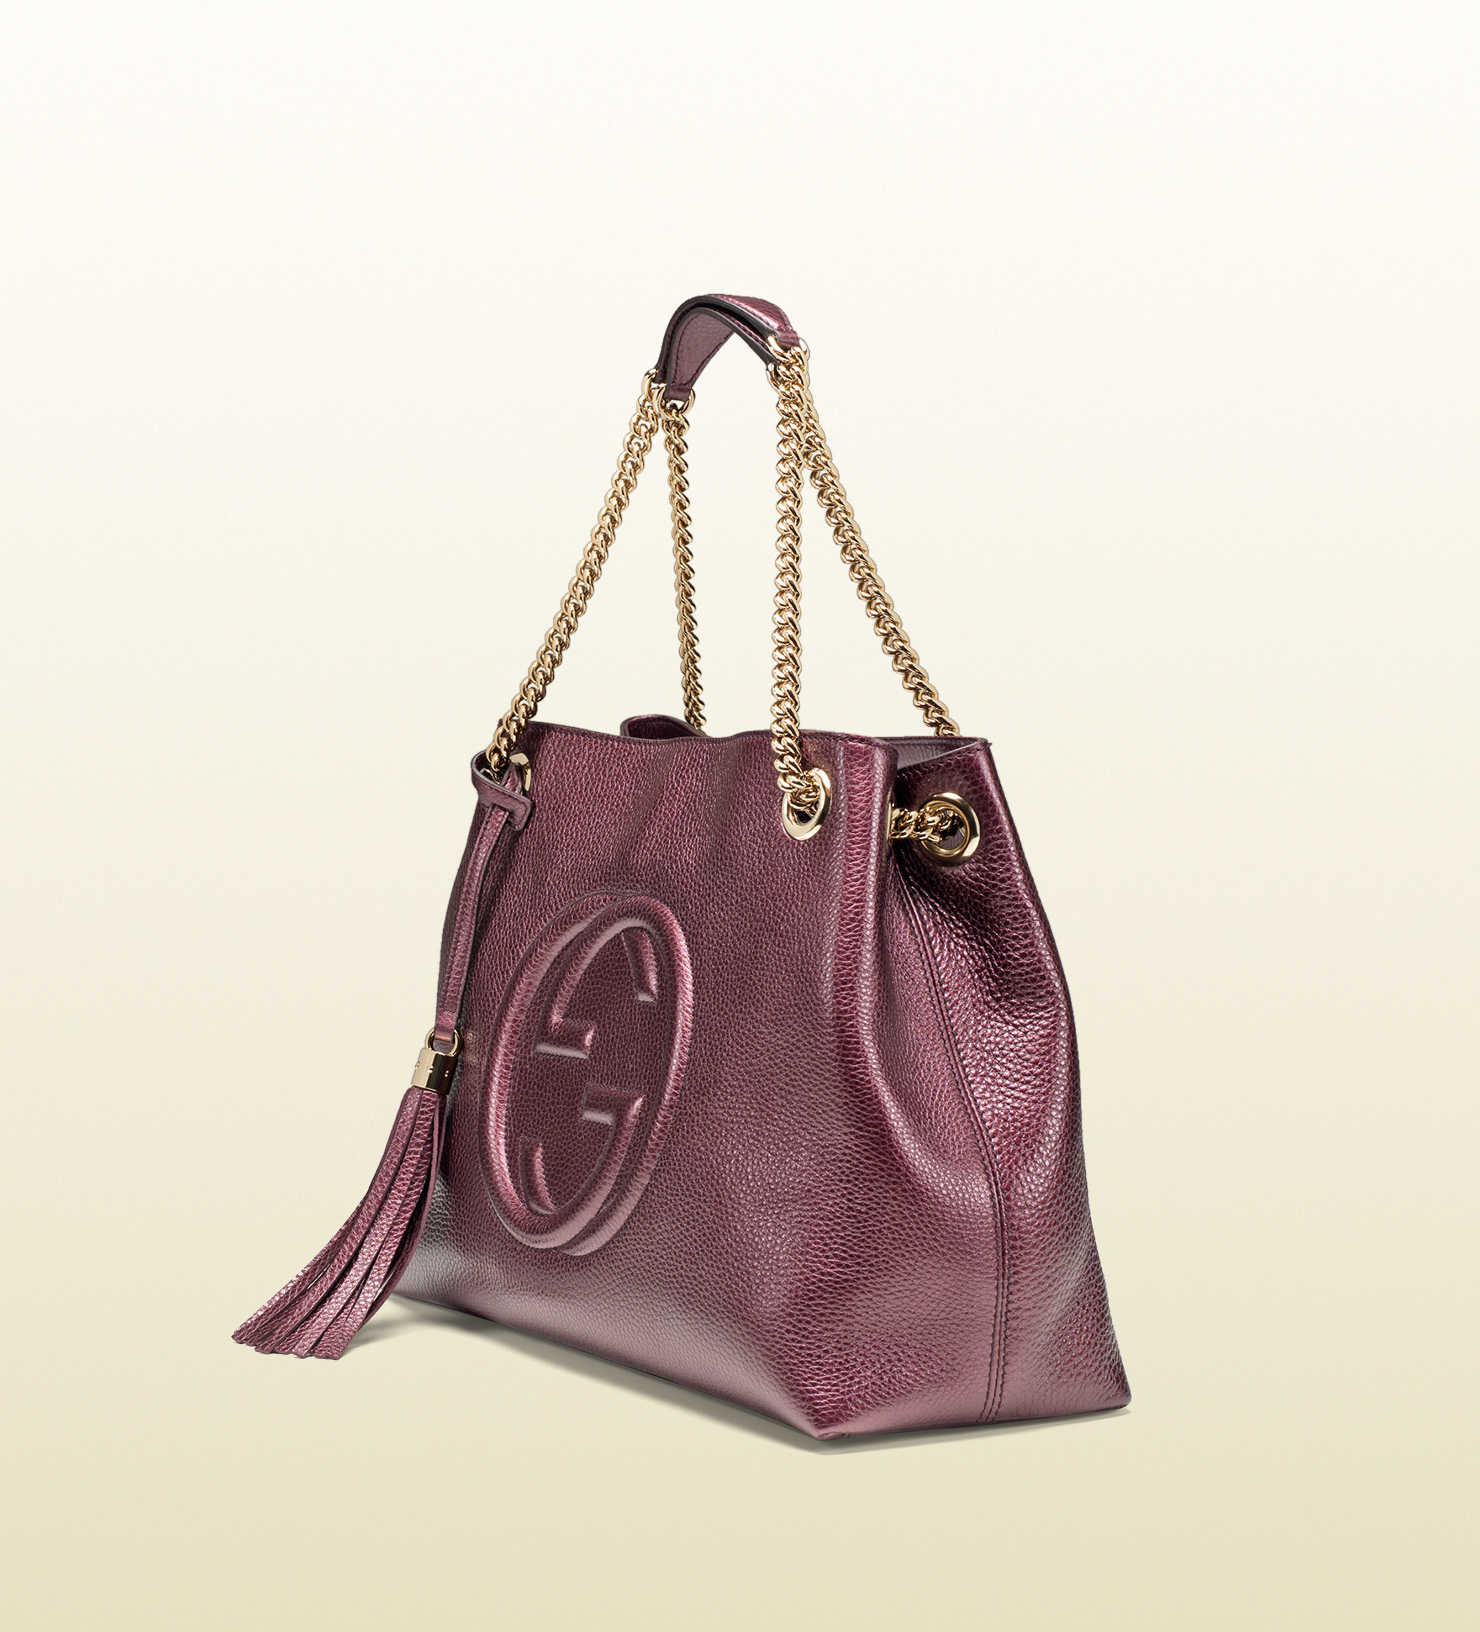 Gucci Soho Metallic Leather Shoulder Bag in Purple | Lyst